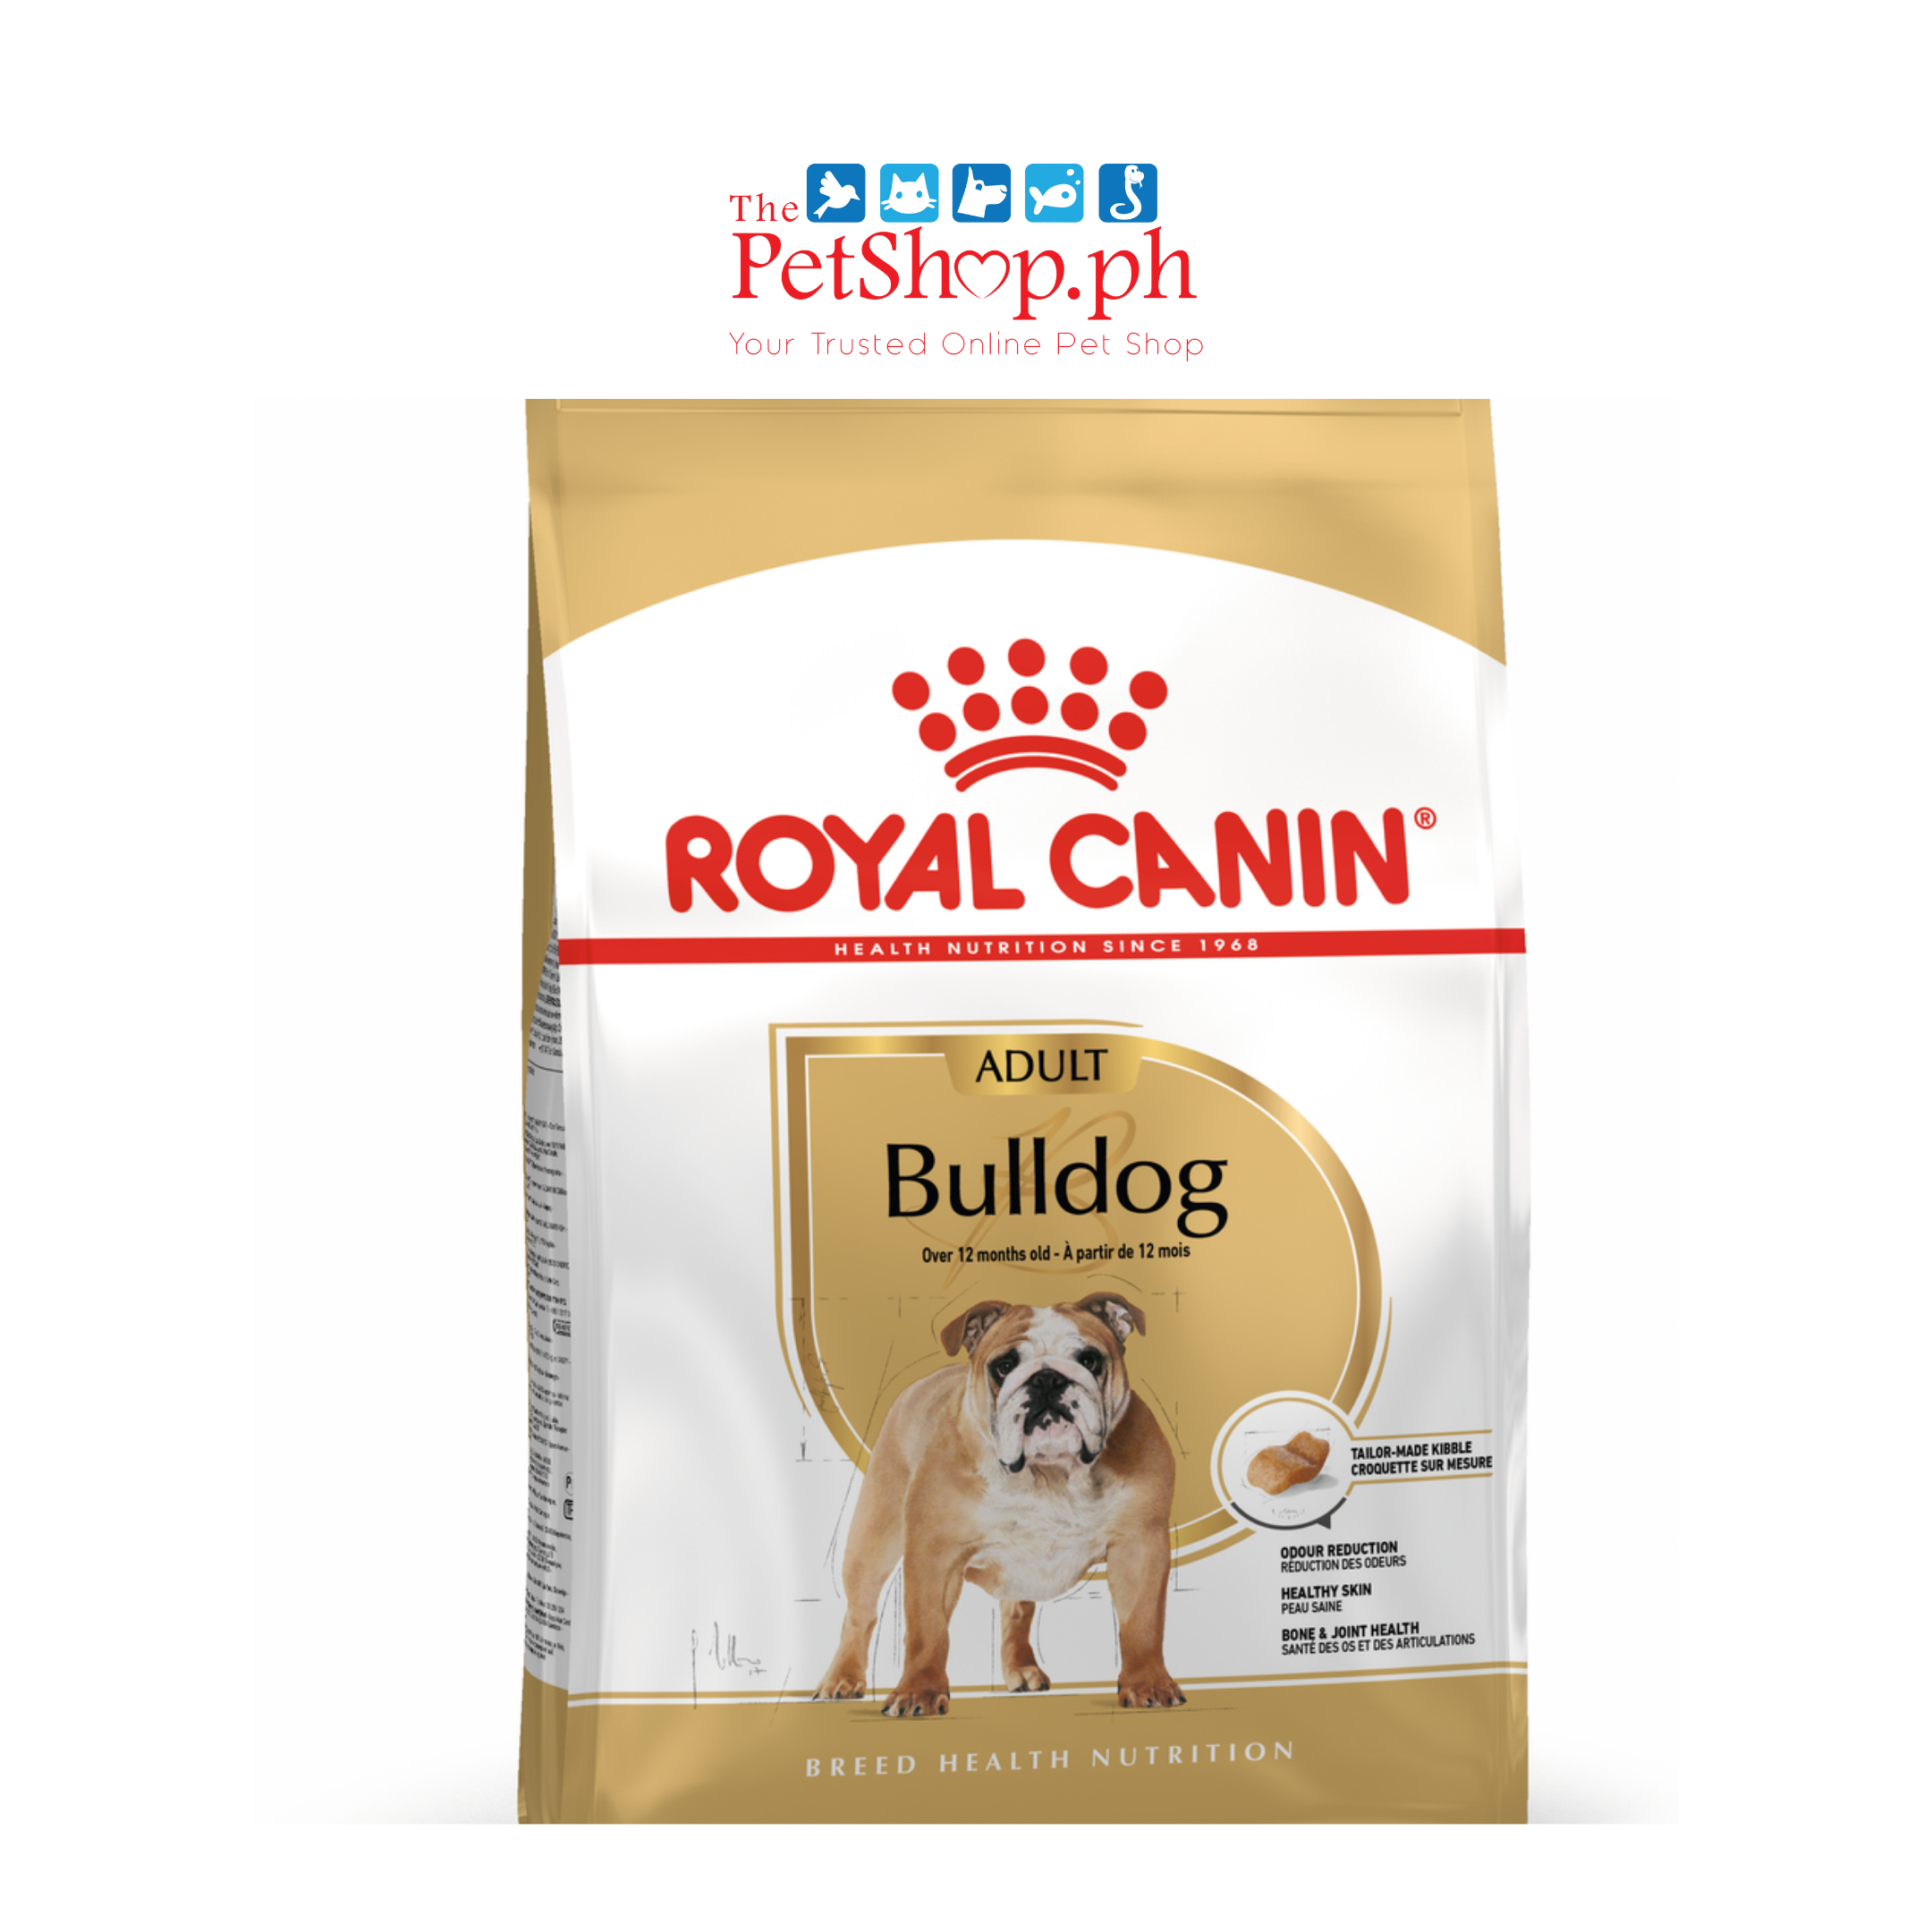 Royal Canin Bulldog Adult 3kg Adult Dry Dog Food - Breed Health Nutrition